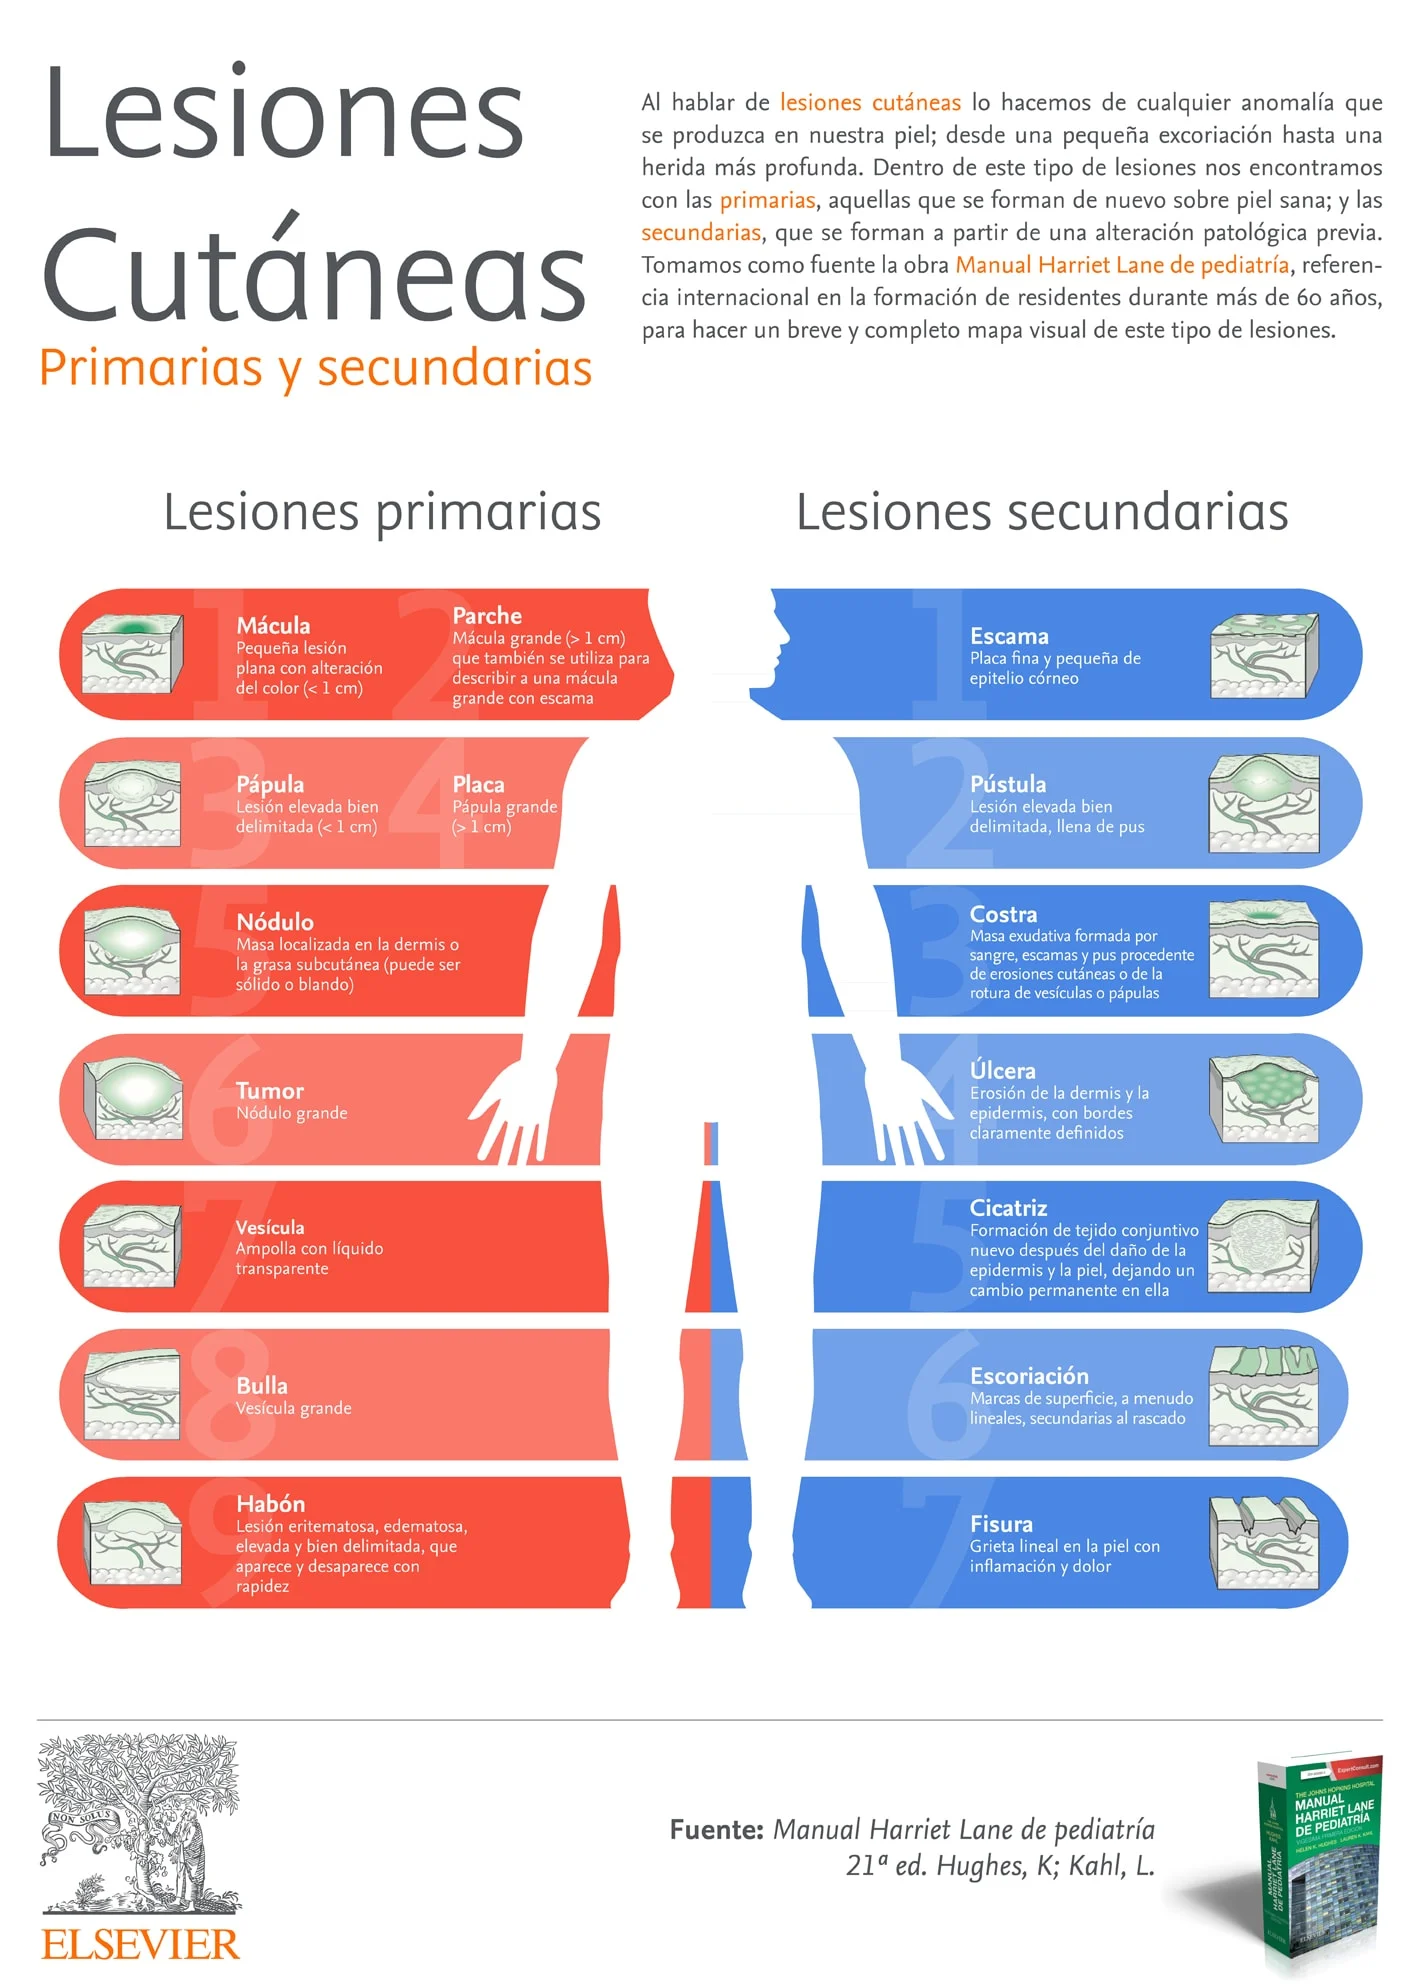 Lesiones Cutaneas infografia